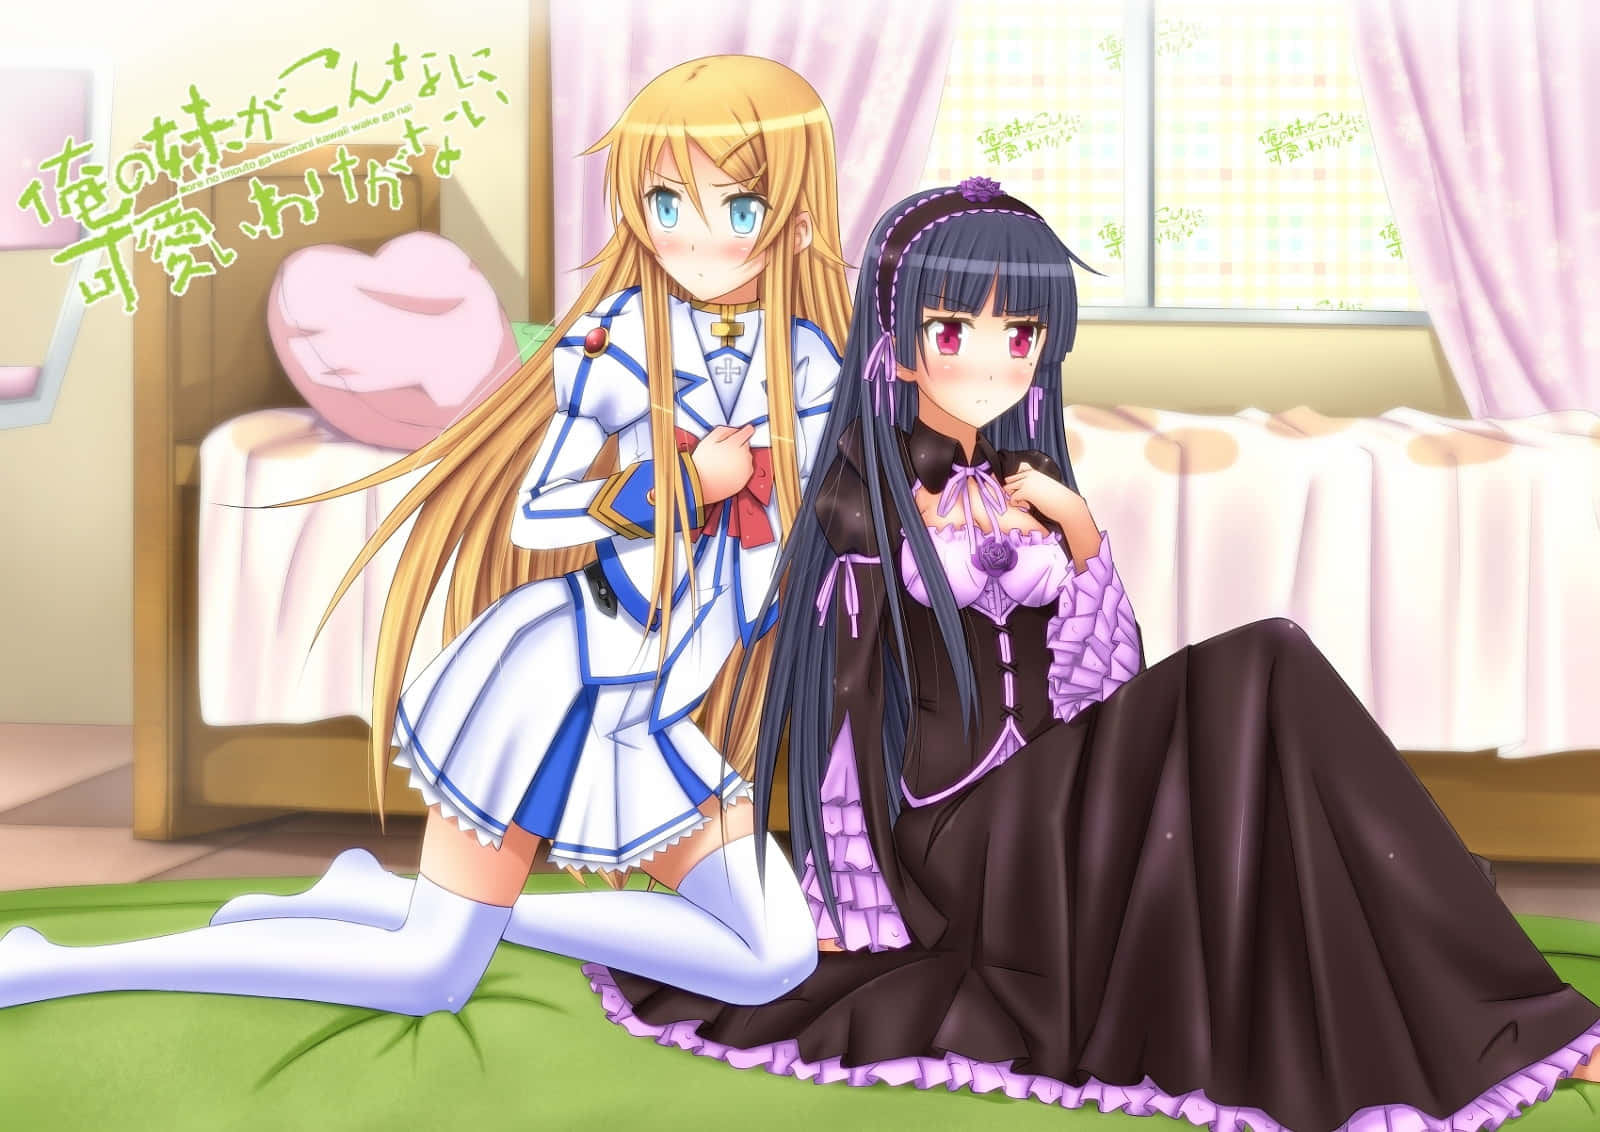 Pretty Anime Digital Artwork Of Cute Sisters Background